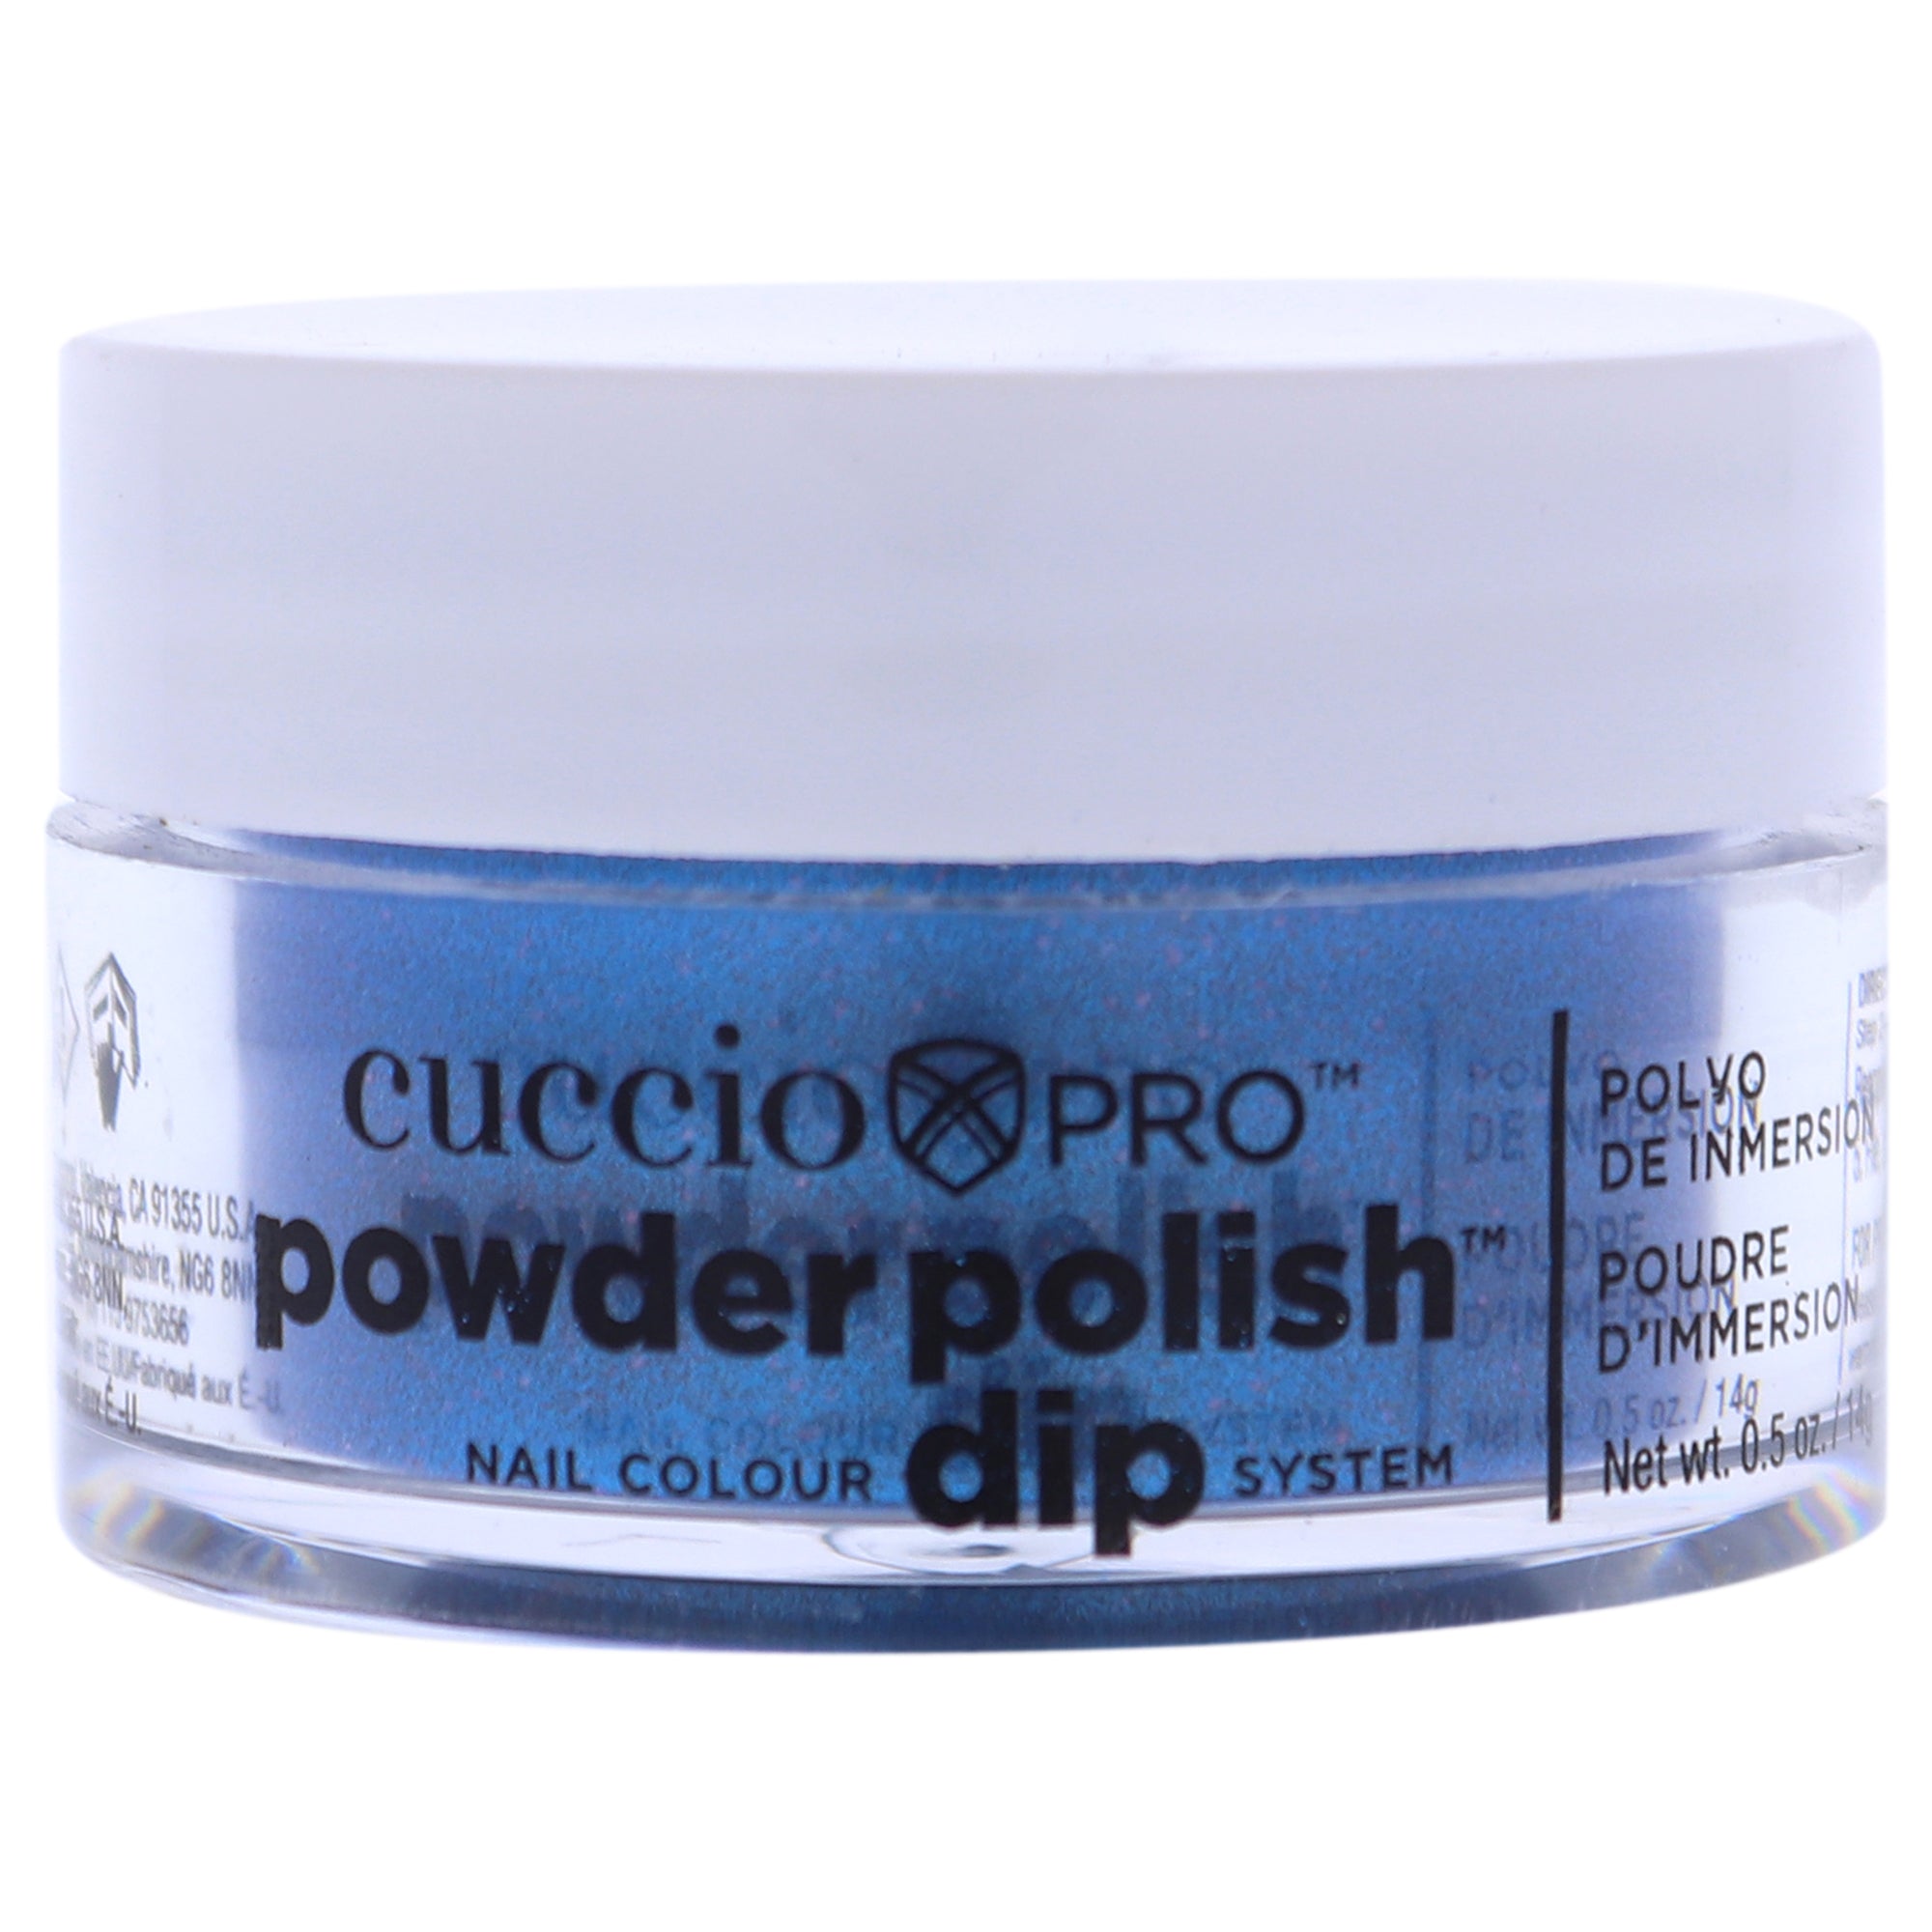 Pro Powder Polish Nail Colour Dip System - Blue With Pink Glitter by Cuccio Colour for Women - 0.5 oz Nail Powder